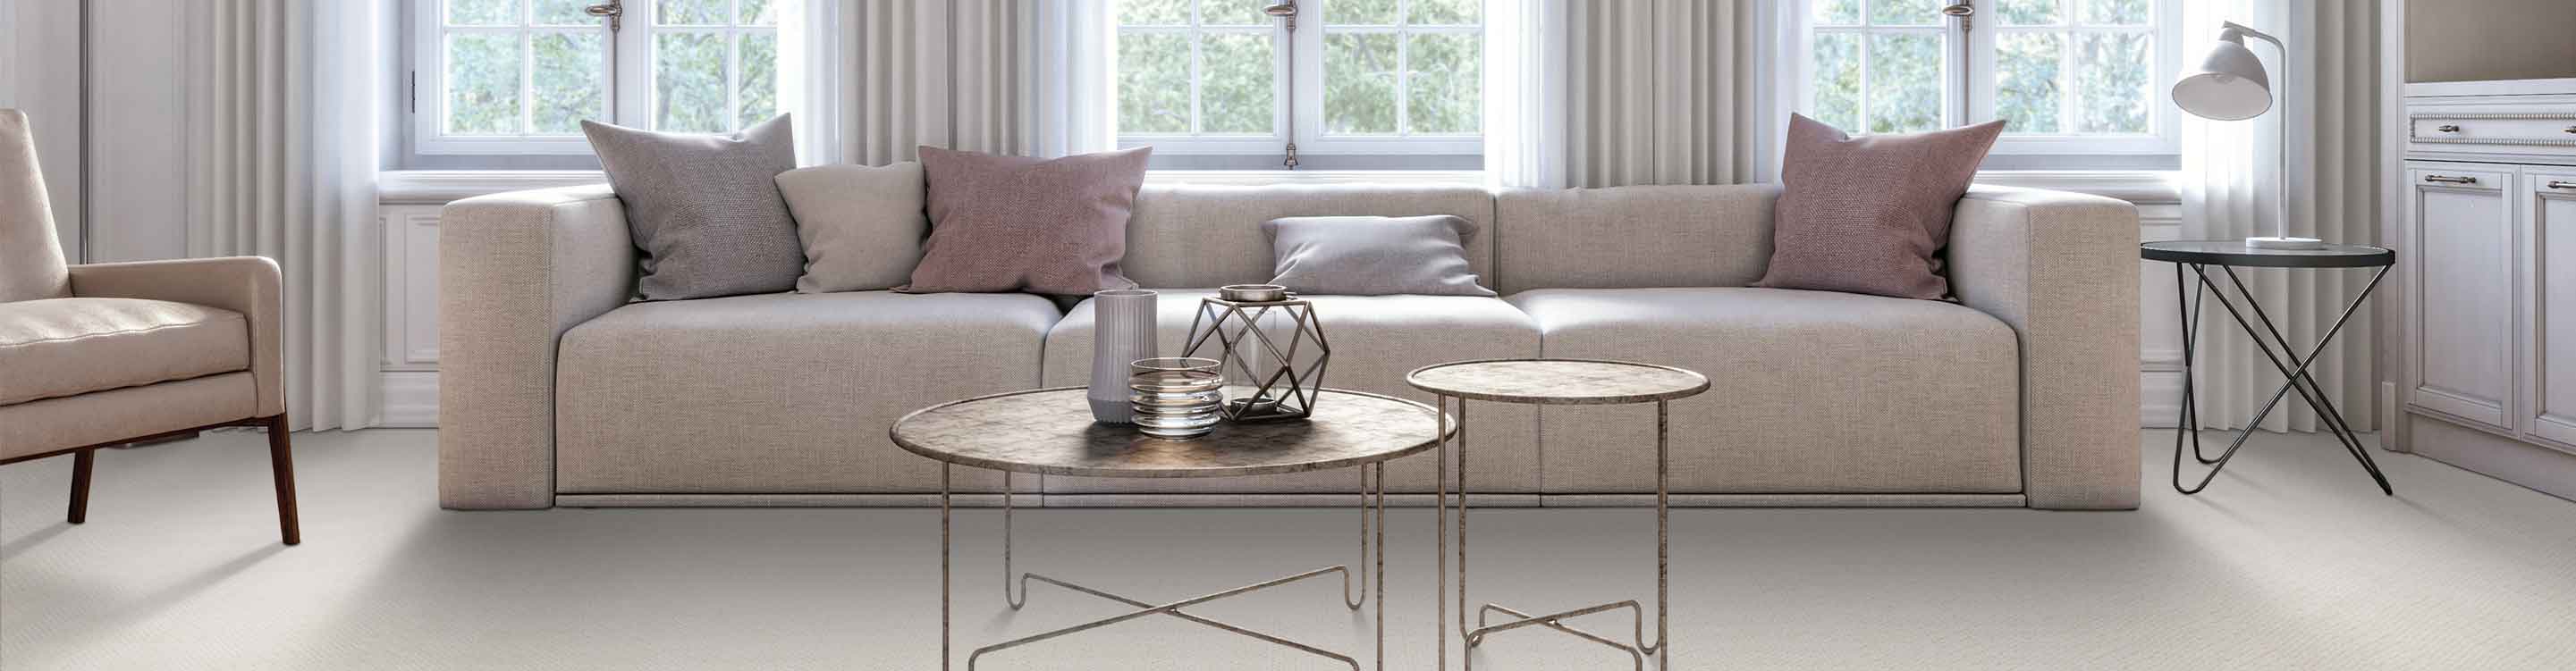 Karastan beige carpet in living room